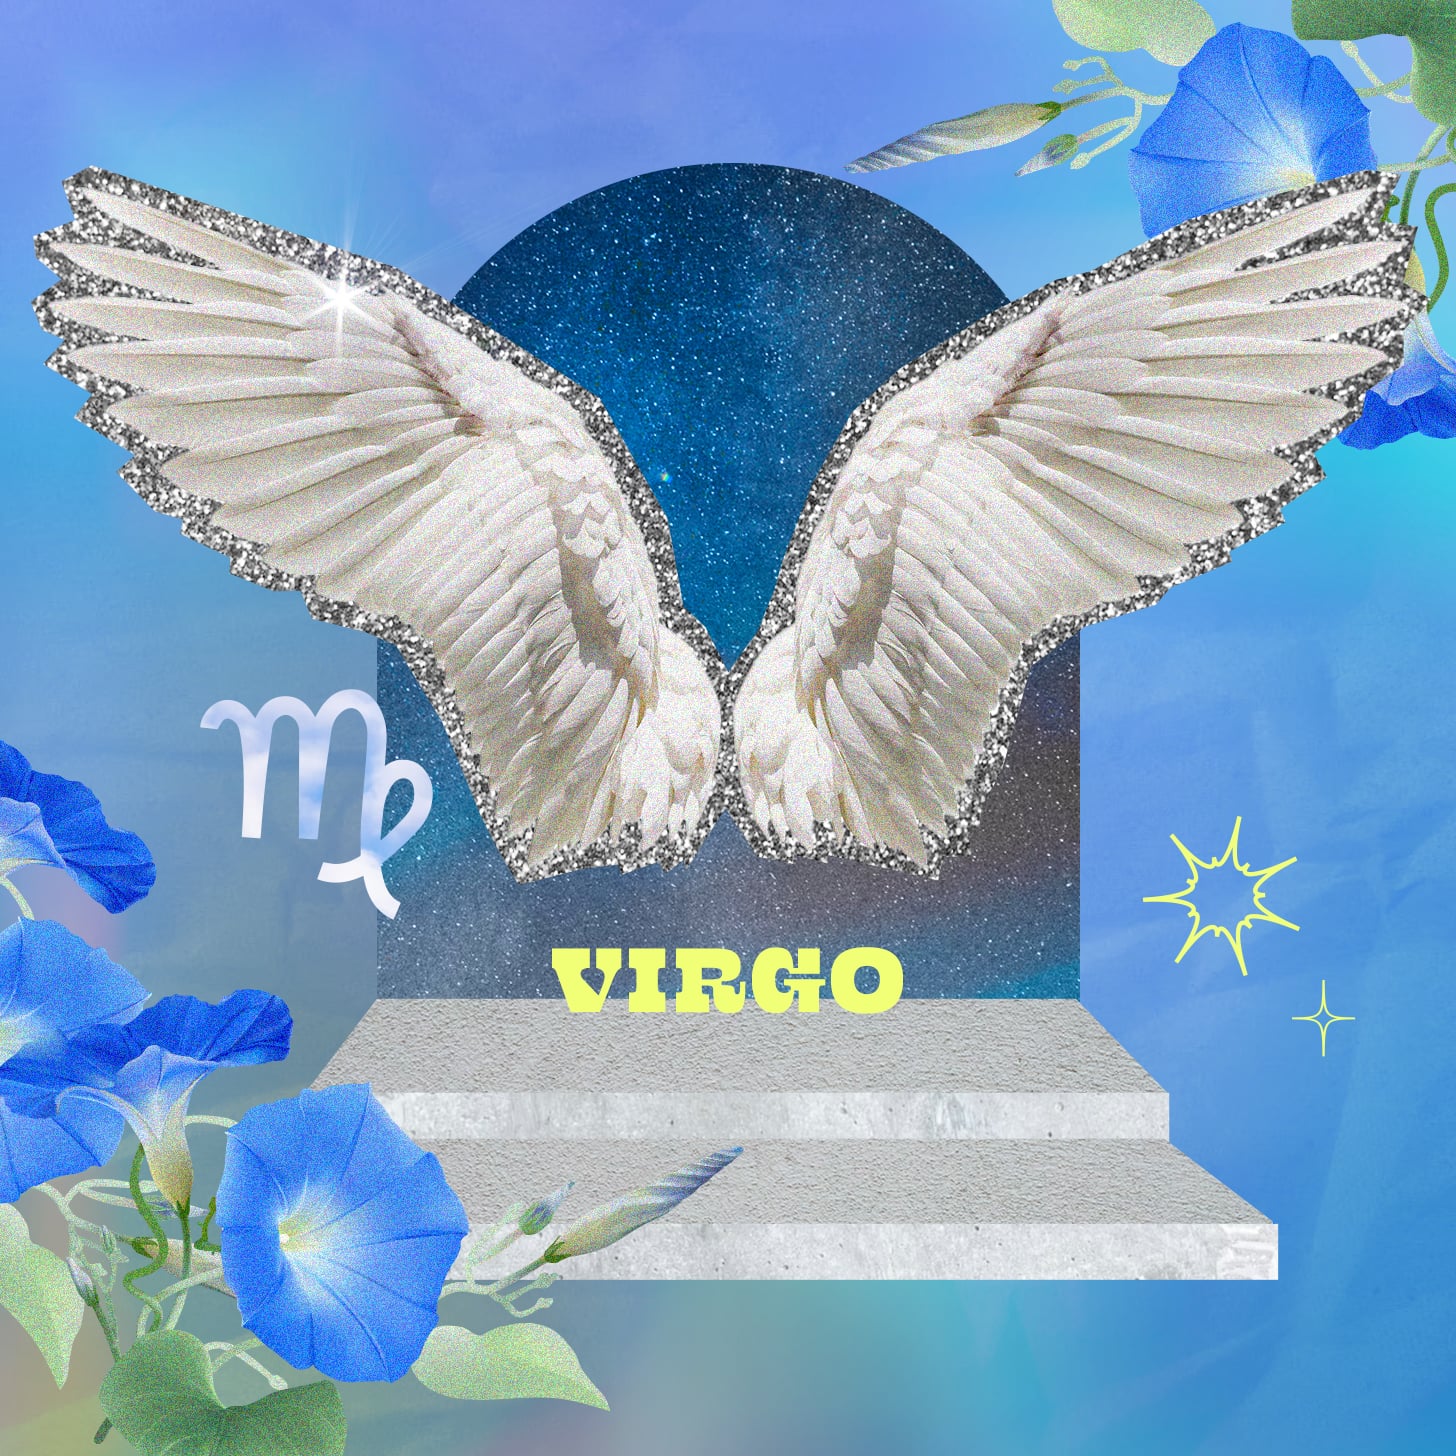 Virgo weekly horoscope for August 7-13, 2022